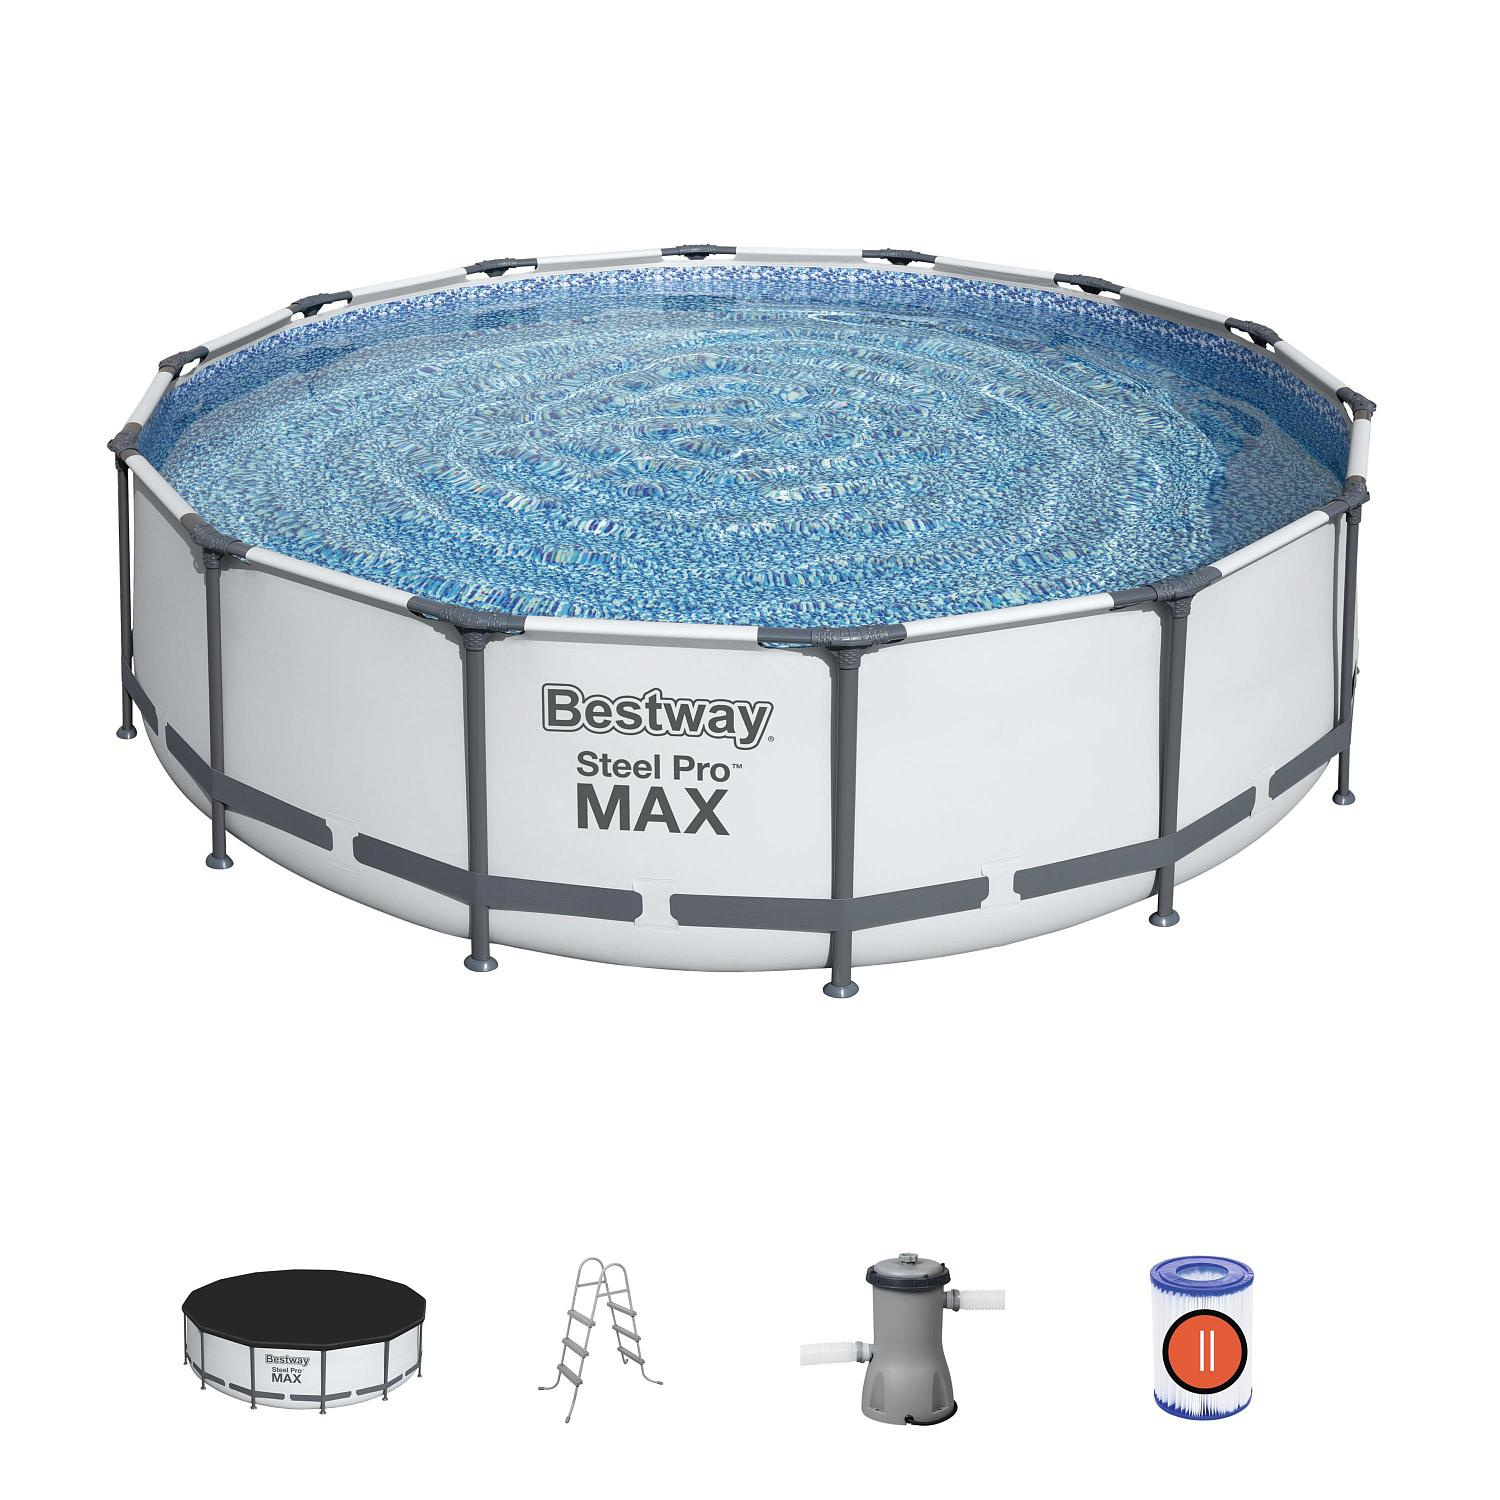 Bestway Steel Pro Max 56950 BW из каталога каркасных бассейнов в Краснодаре по цене 61000 ₽